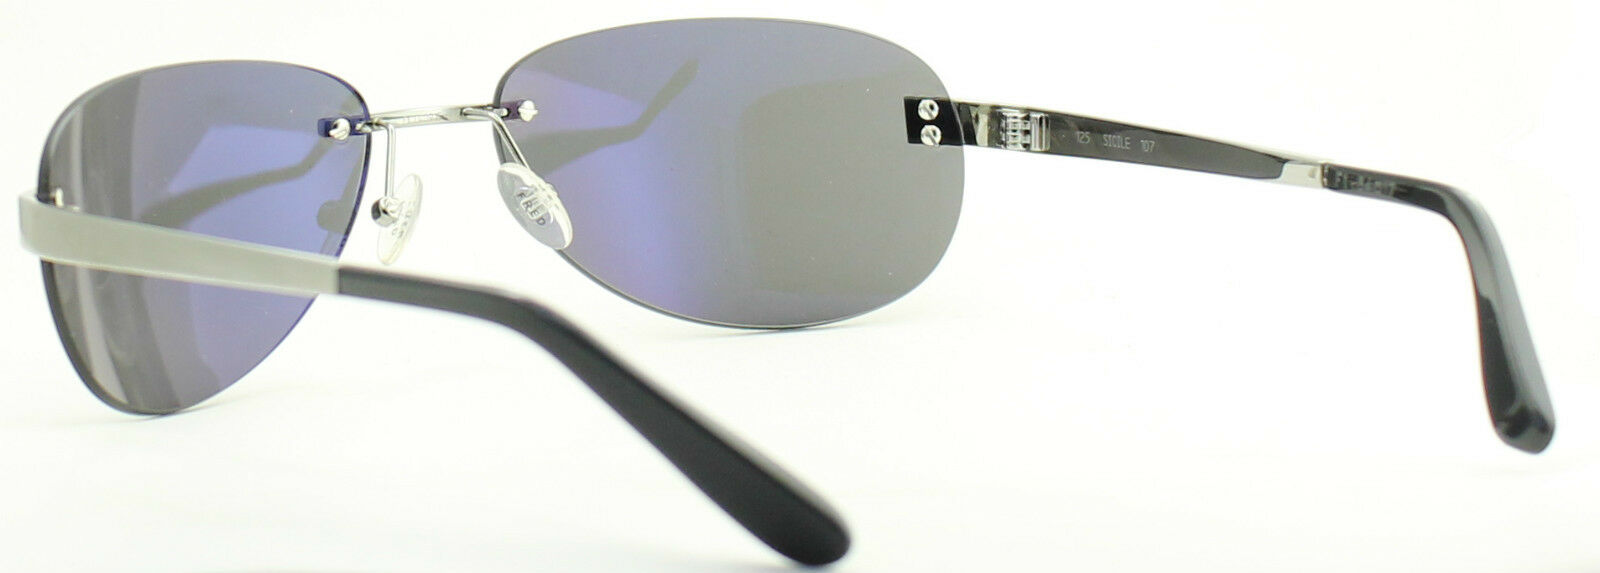 FRED Sicile F1 107 Butterfly Sunglasses Shades BNIB Brand New - France -  TRUSTED - GGV Eyewear